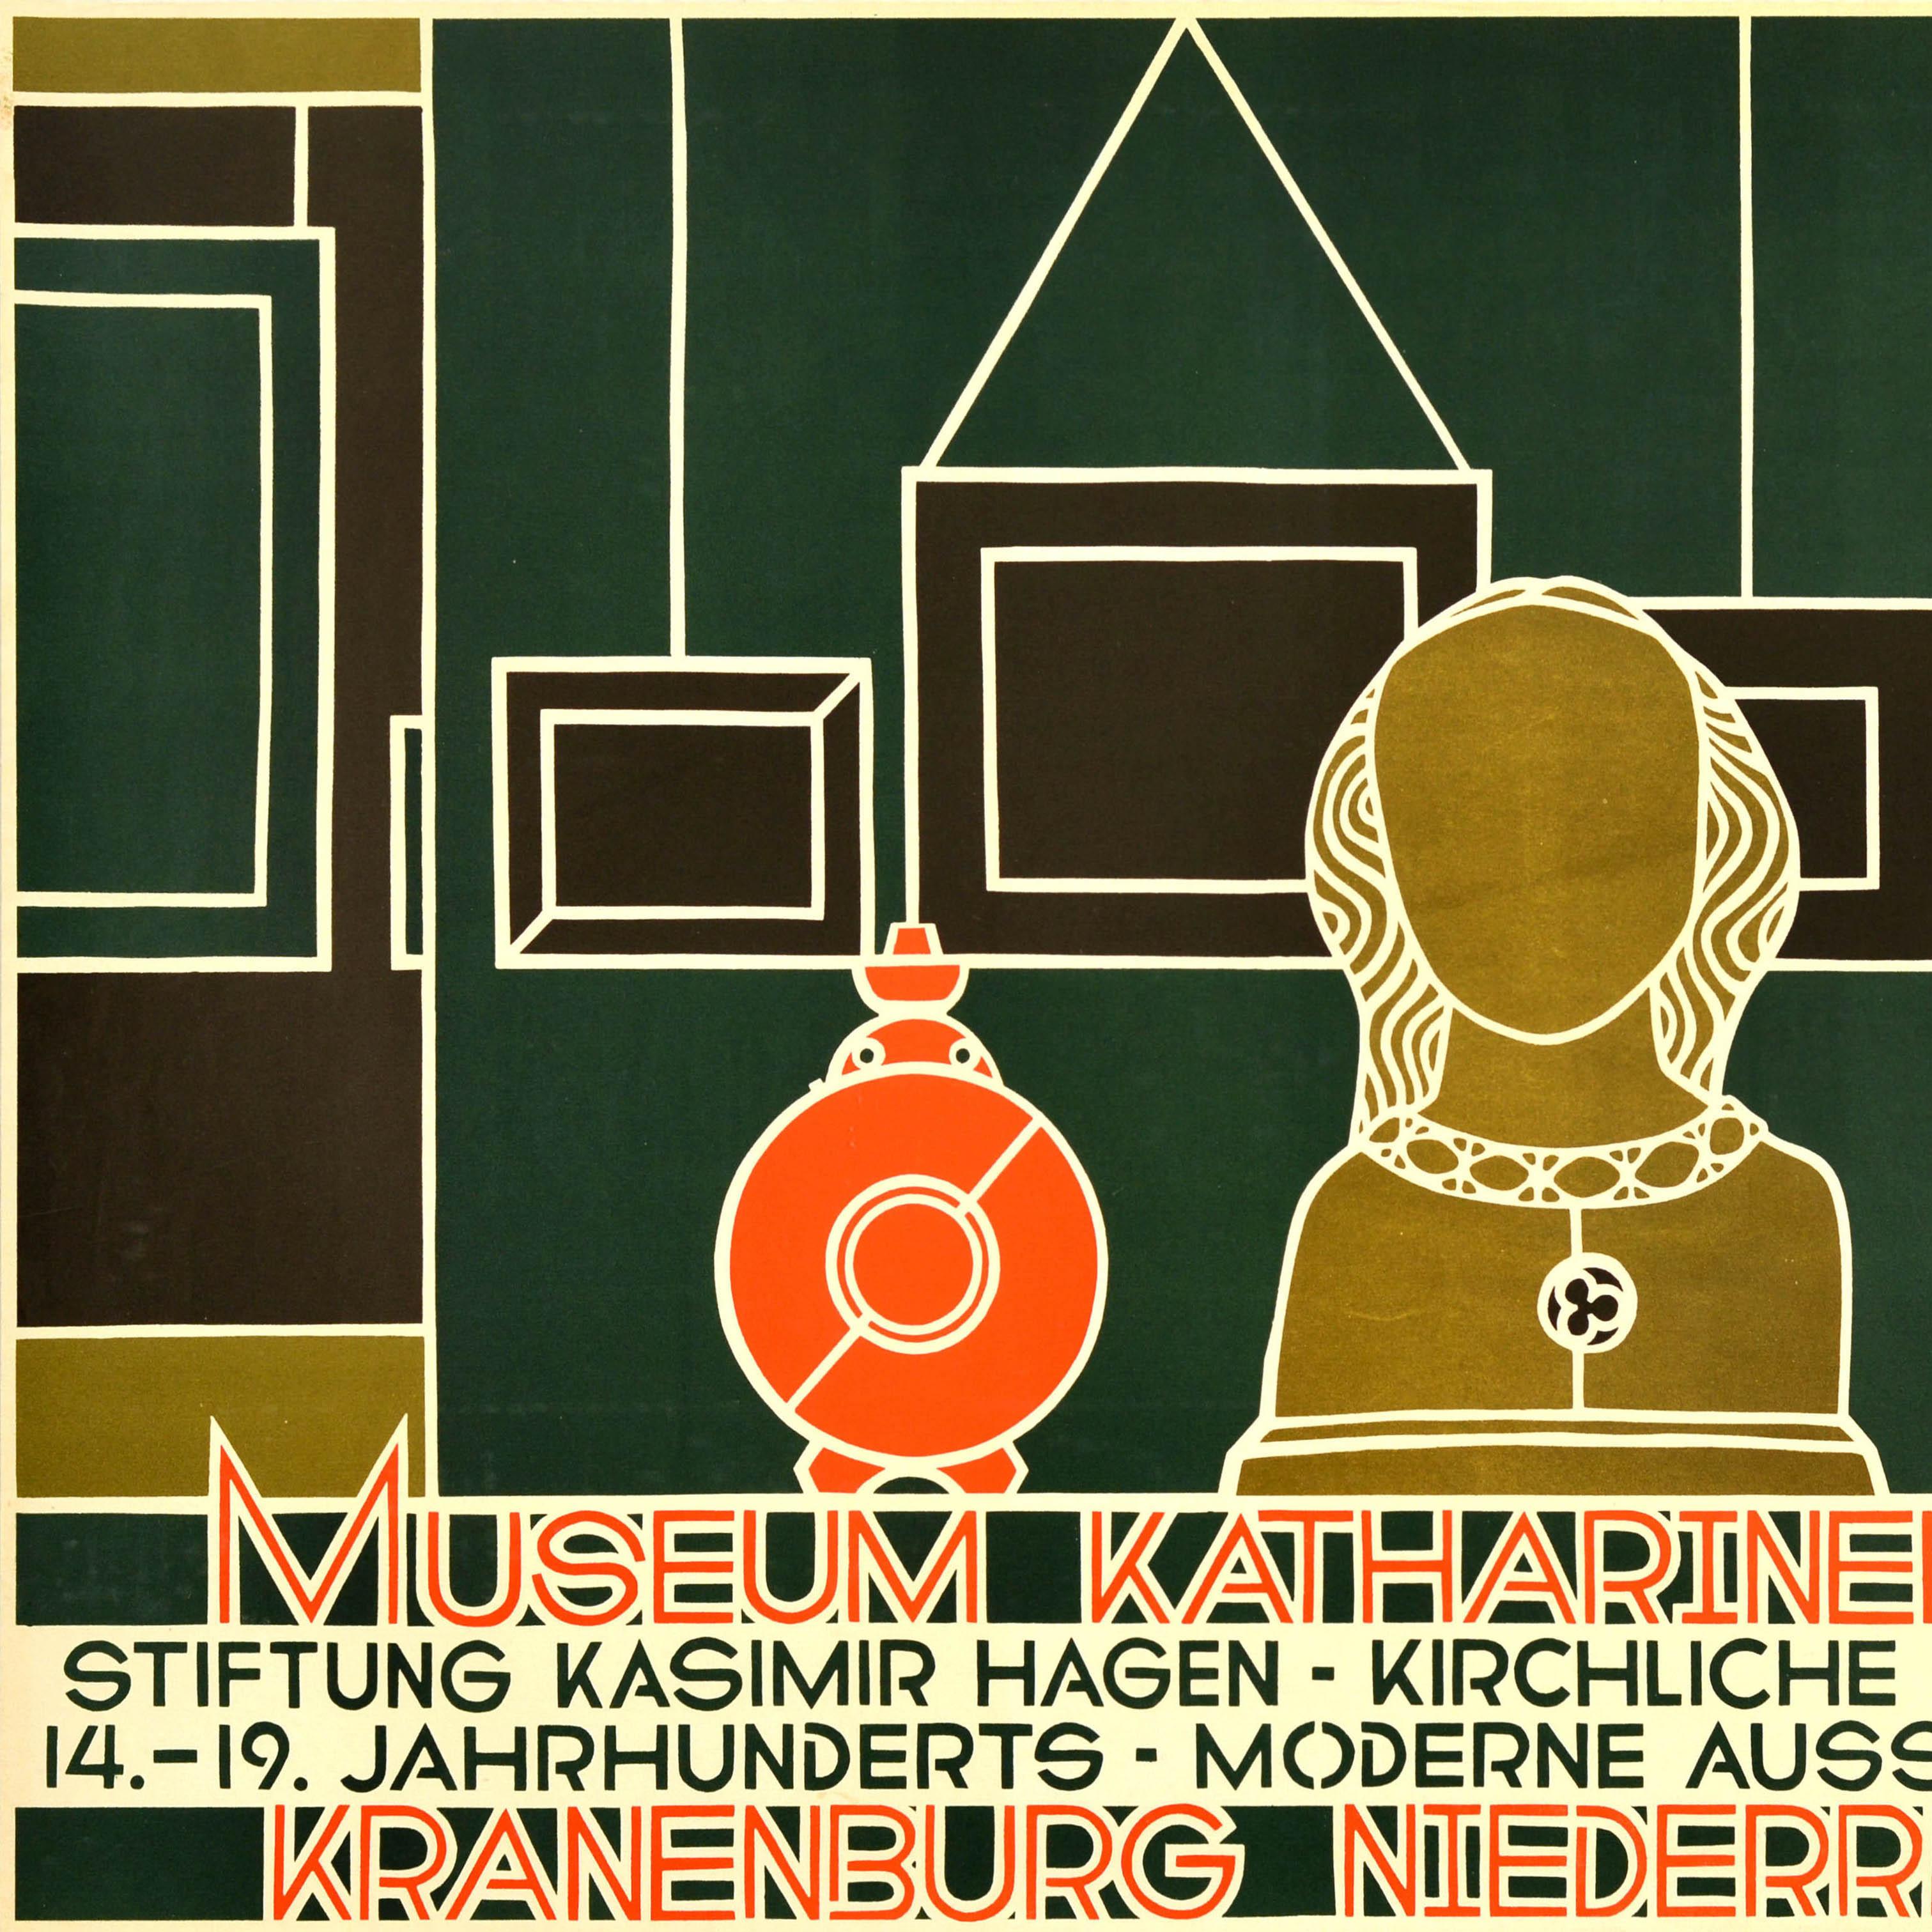 German Original Vintage Advertising Poster Museum Katharinenhof Modern Art Exhibition For Sale